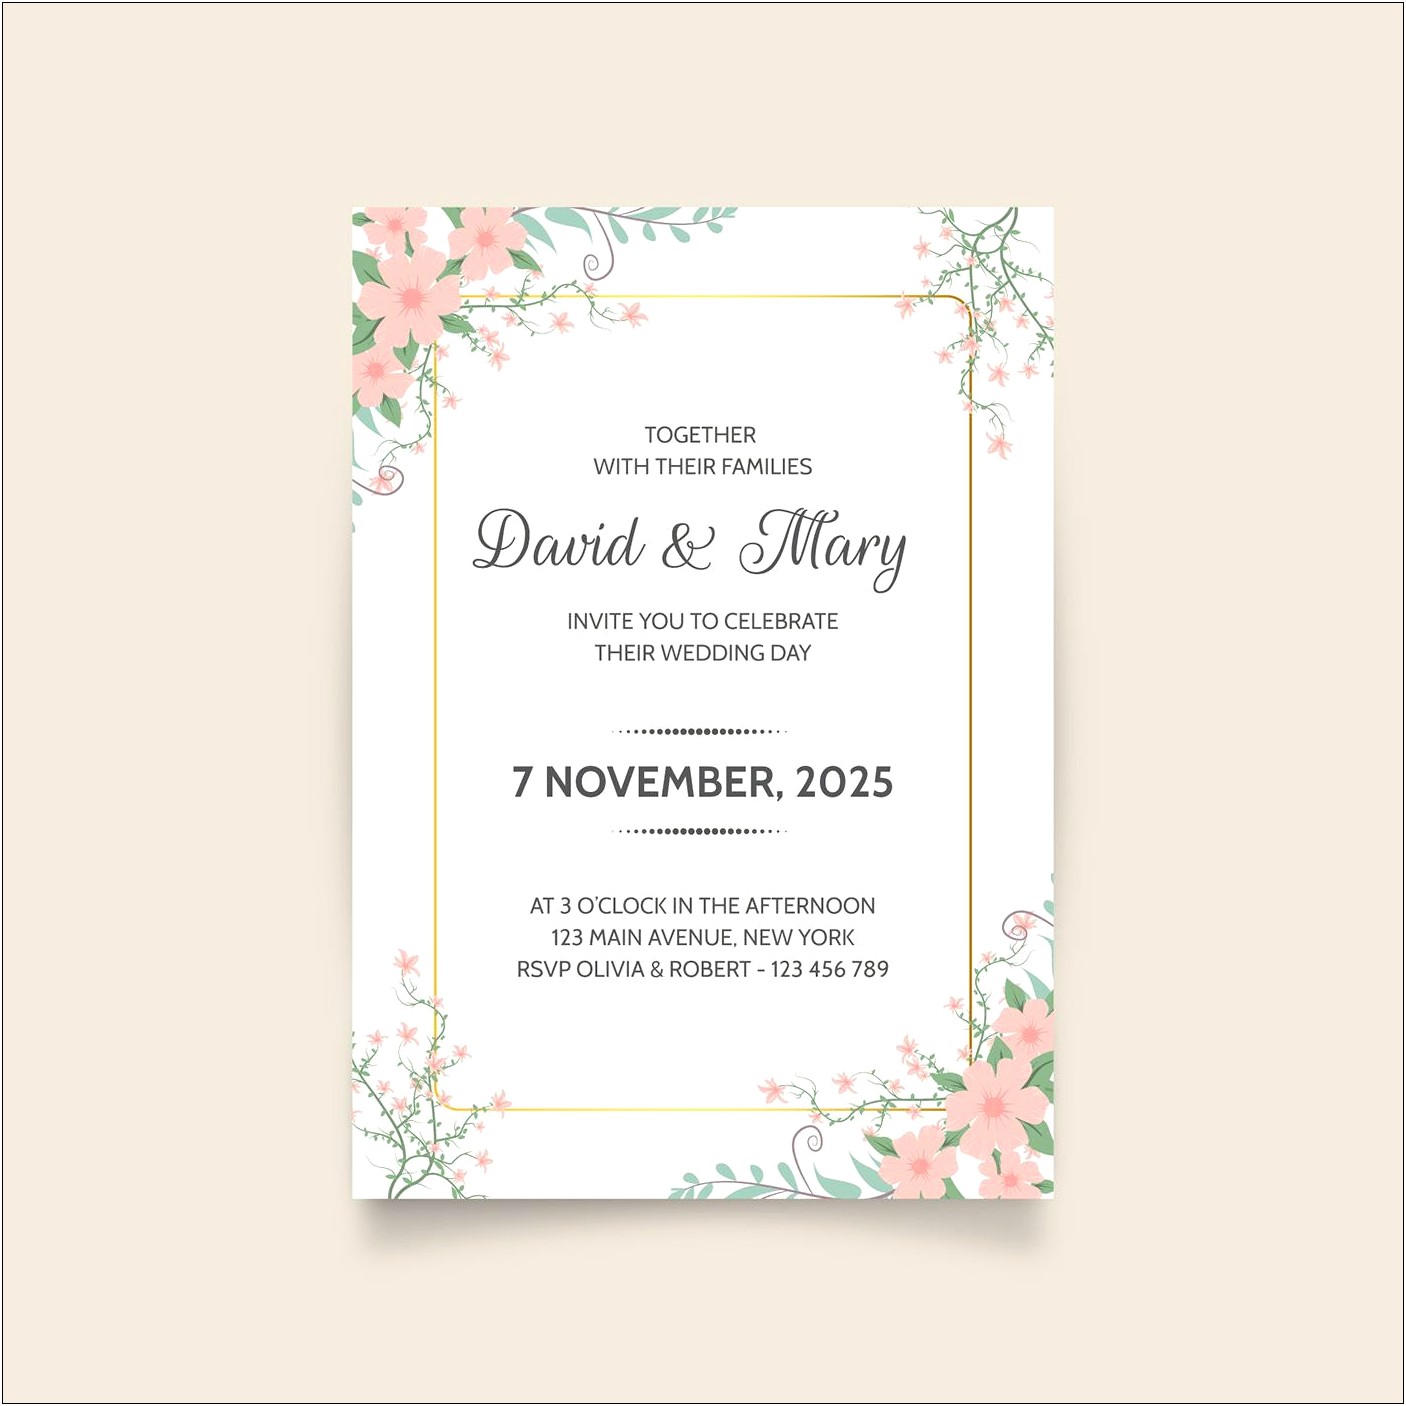 Wedding Invitation Photoshop Psd Templates Download